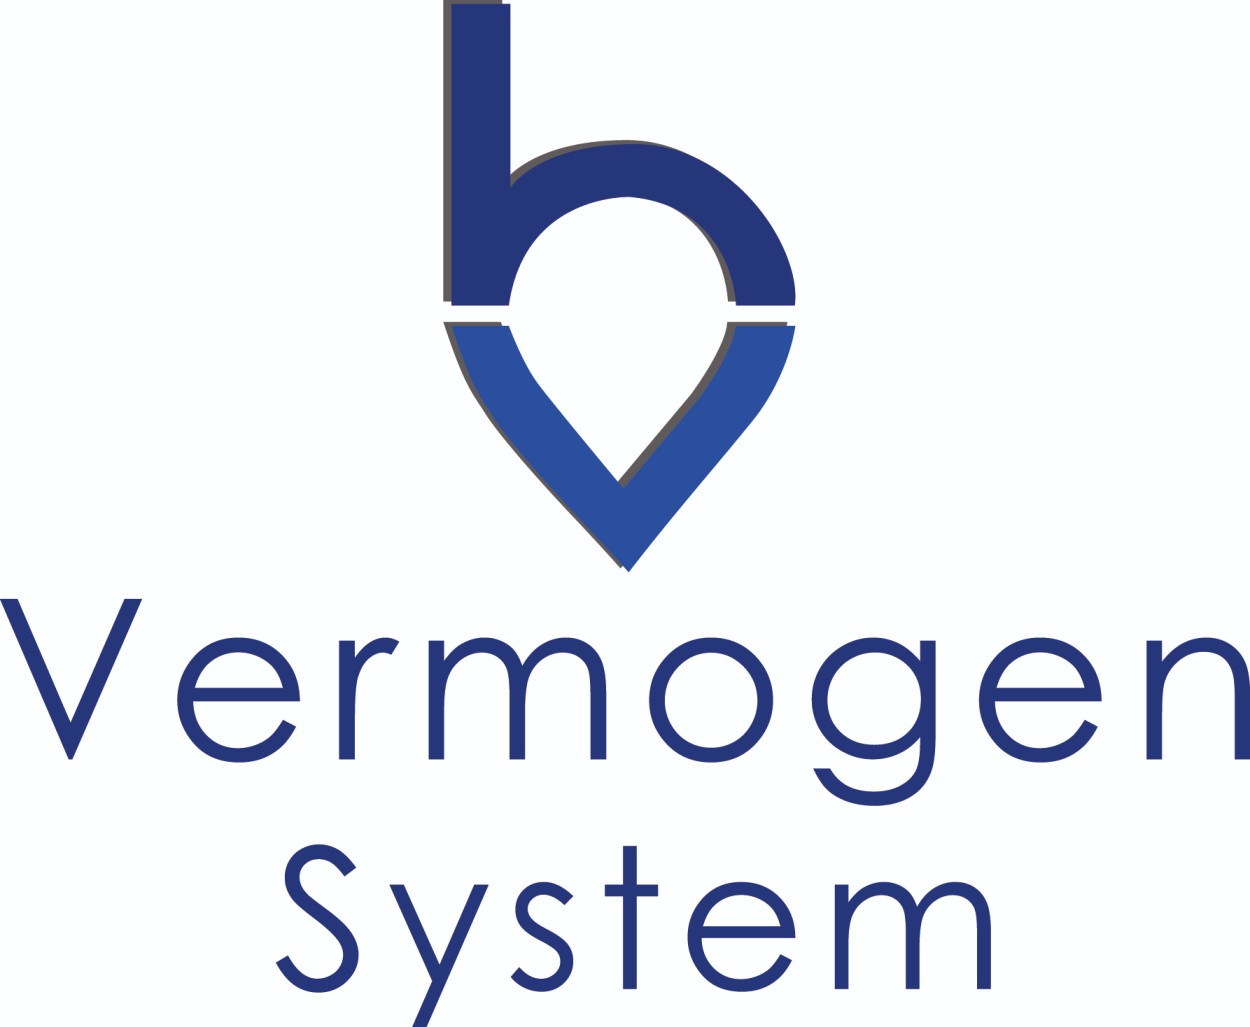 Vermogen System company logo